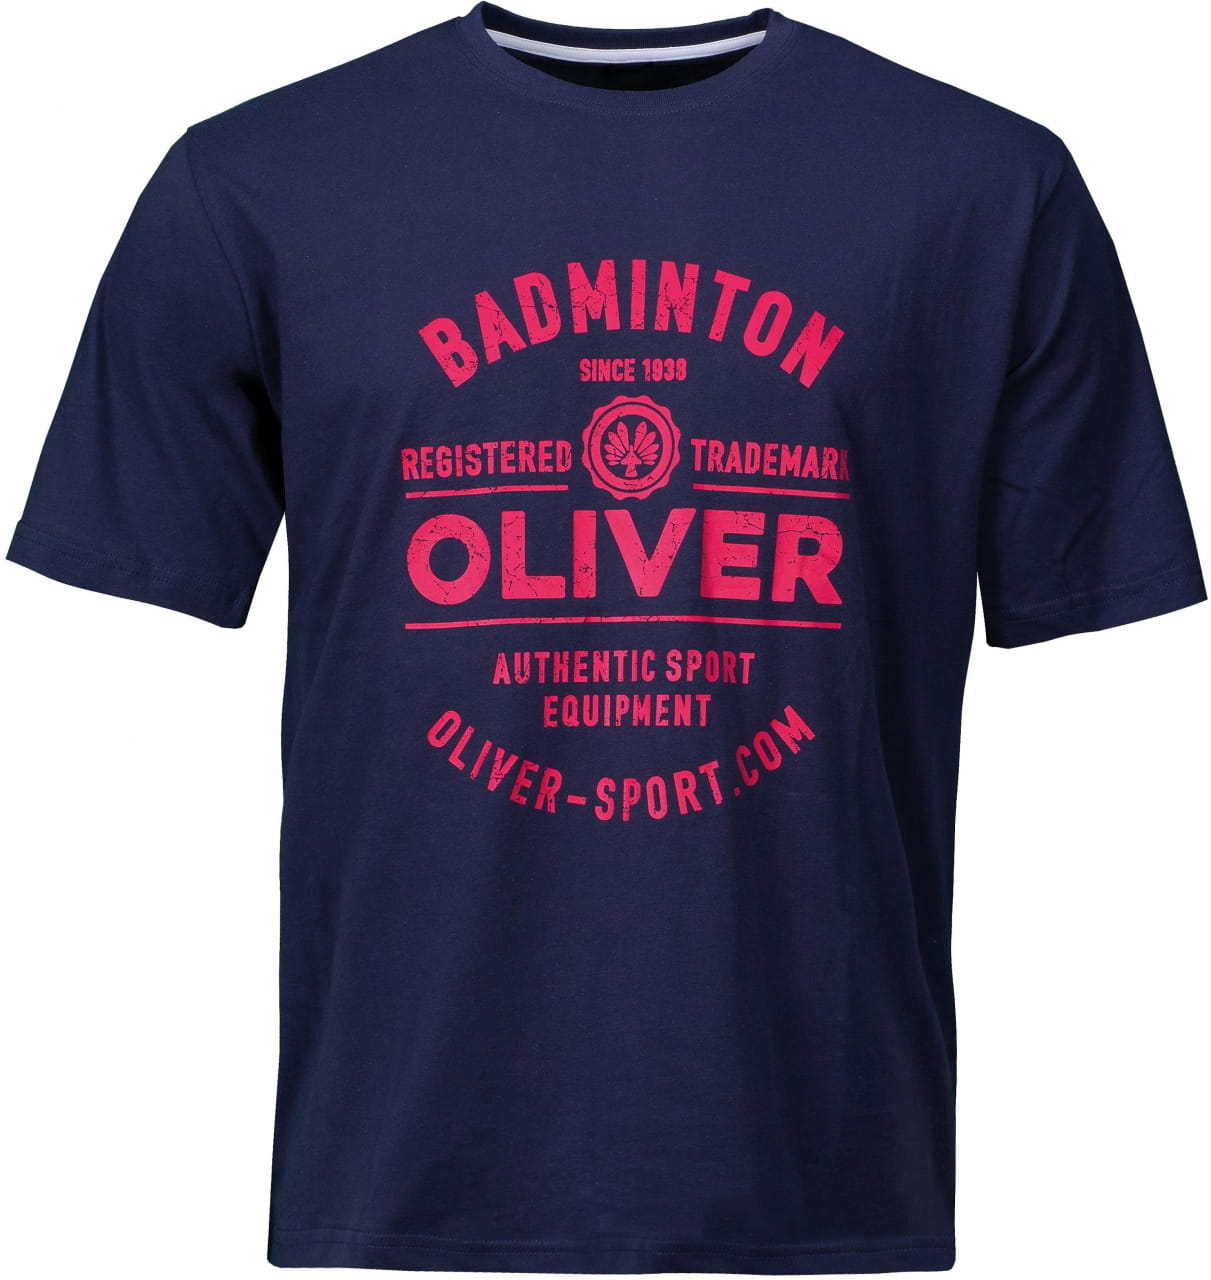 Katoenen T-shirt Oliver Badminton T-Shirt